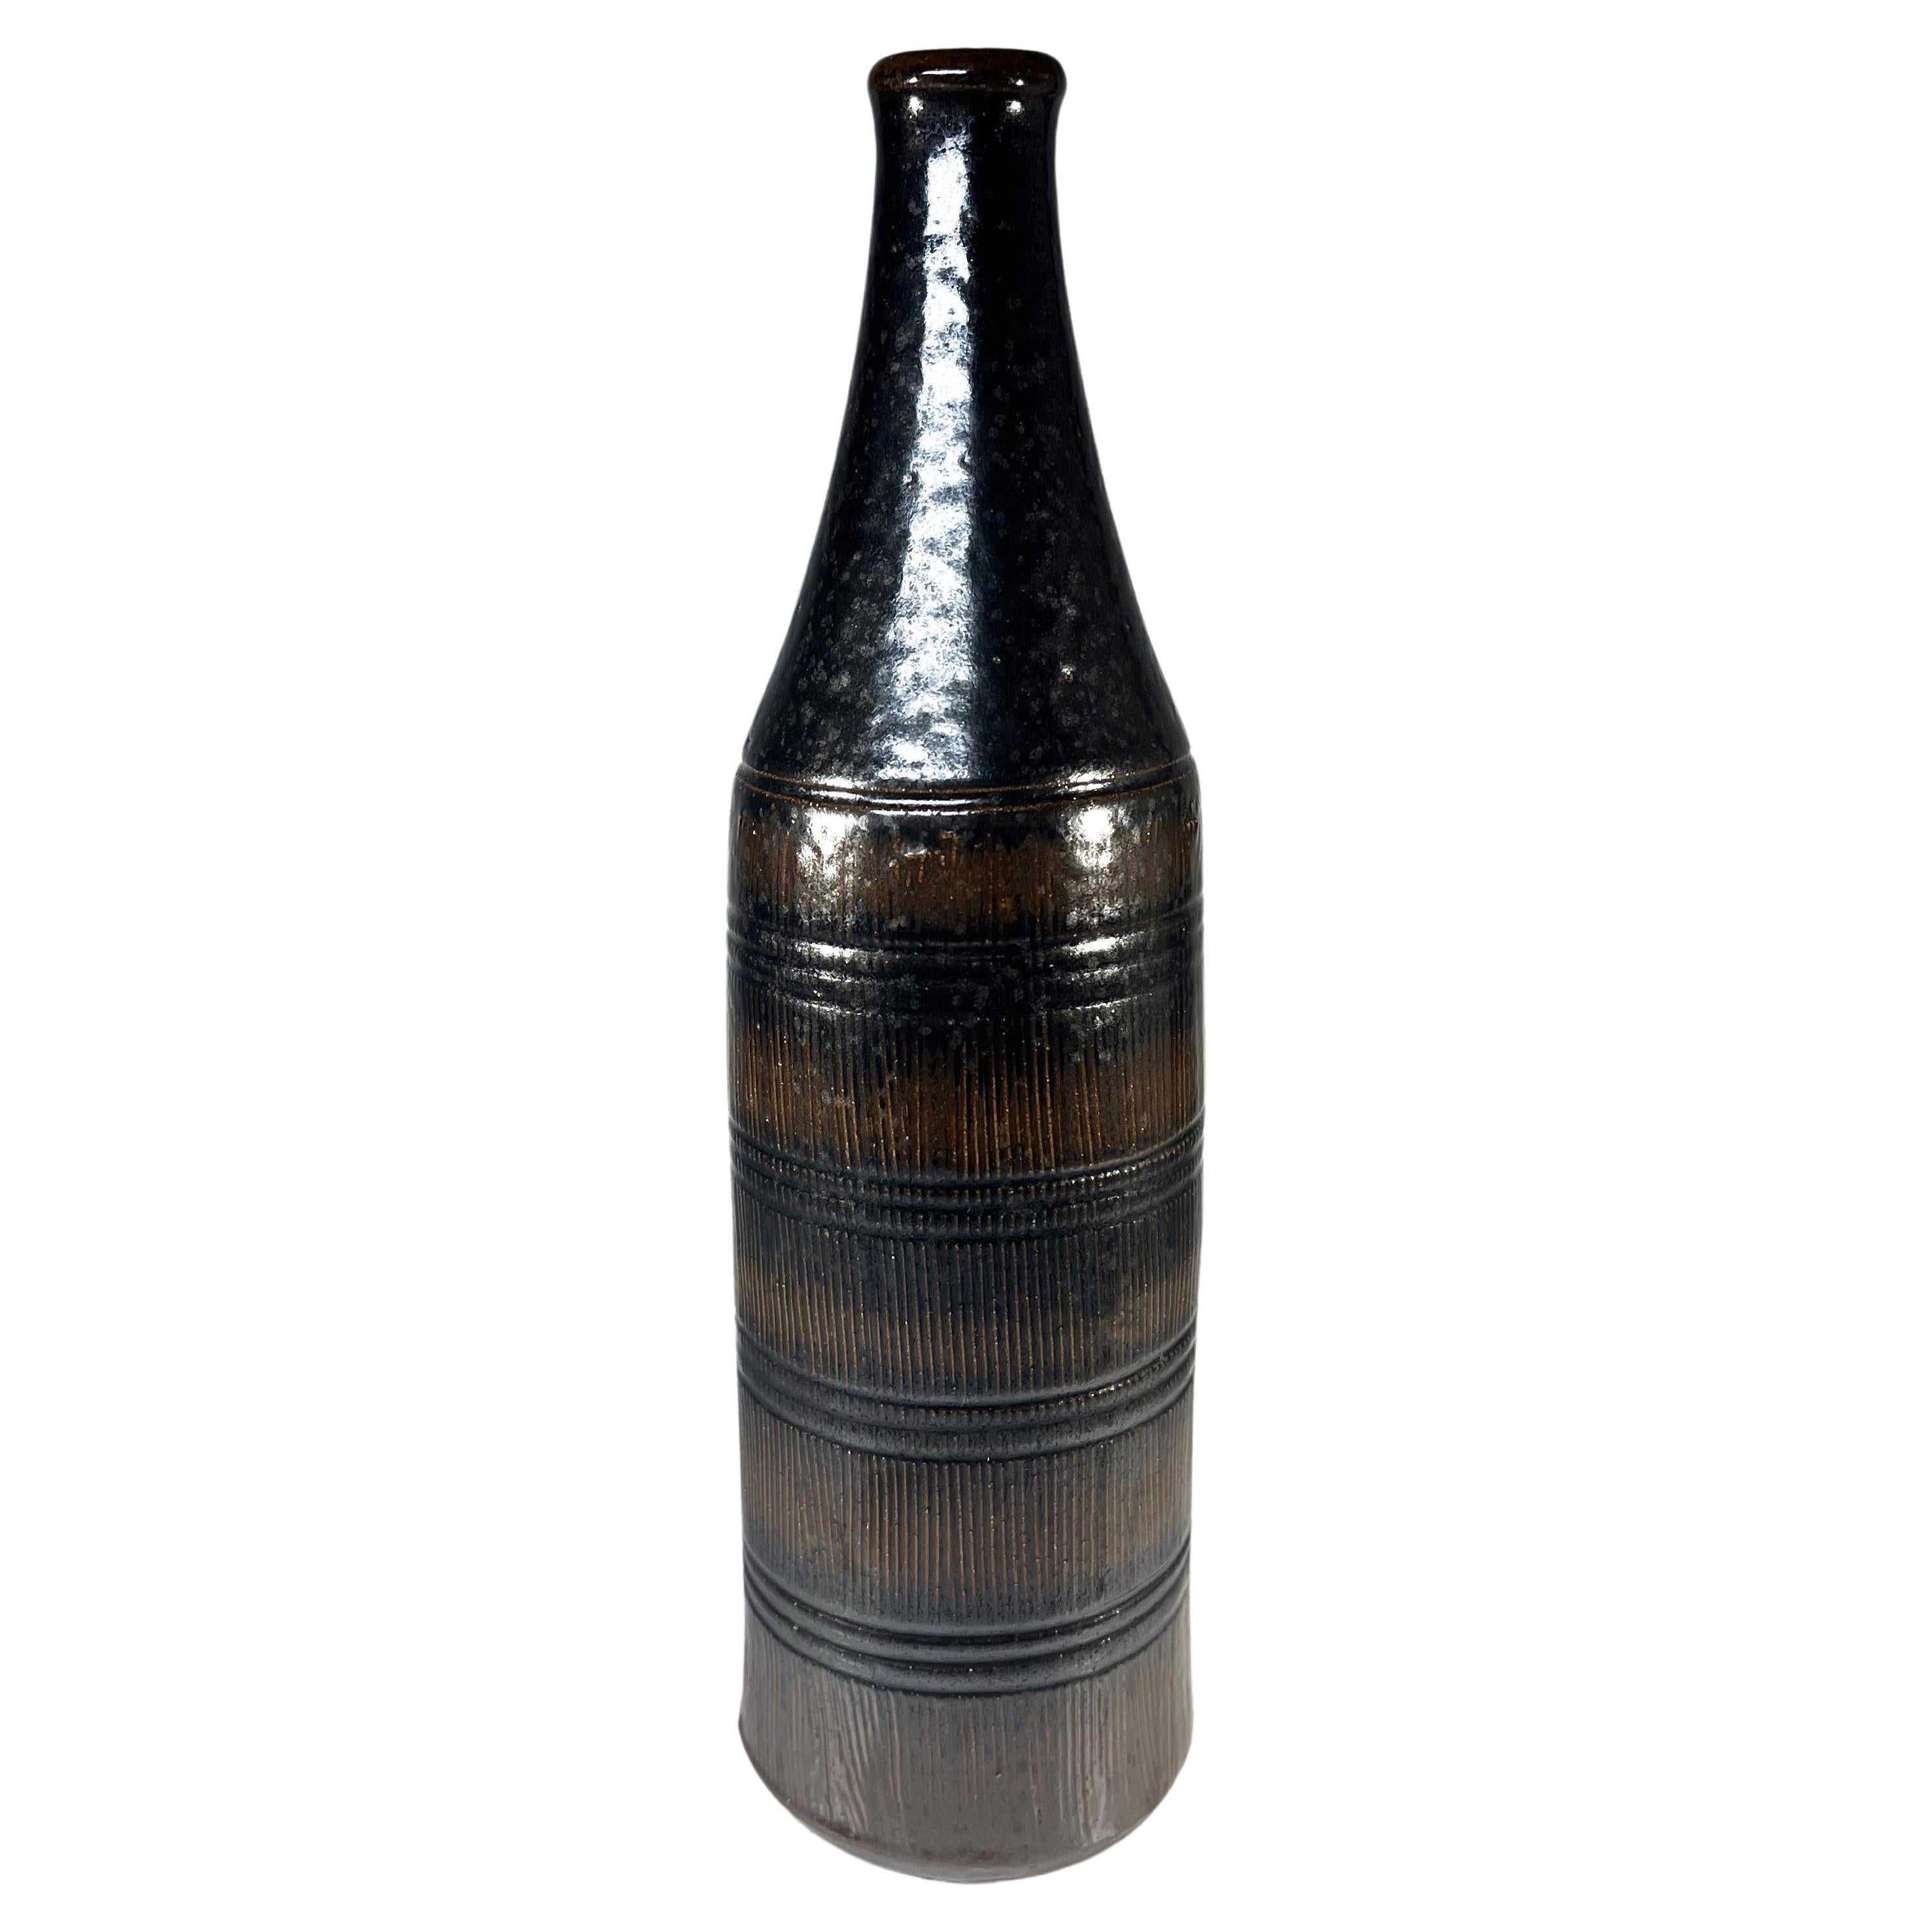 Arthur Andersson For Wallåkra, Sweden, Dark Intense Glazed Stoneware Bottle Vase For Sale